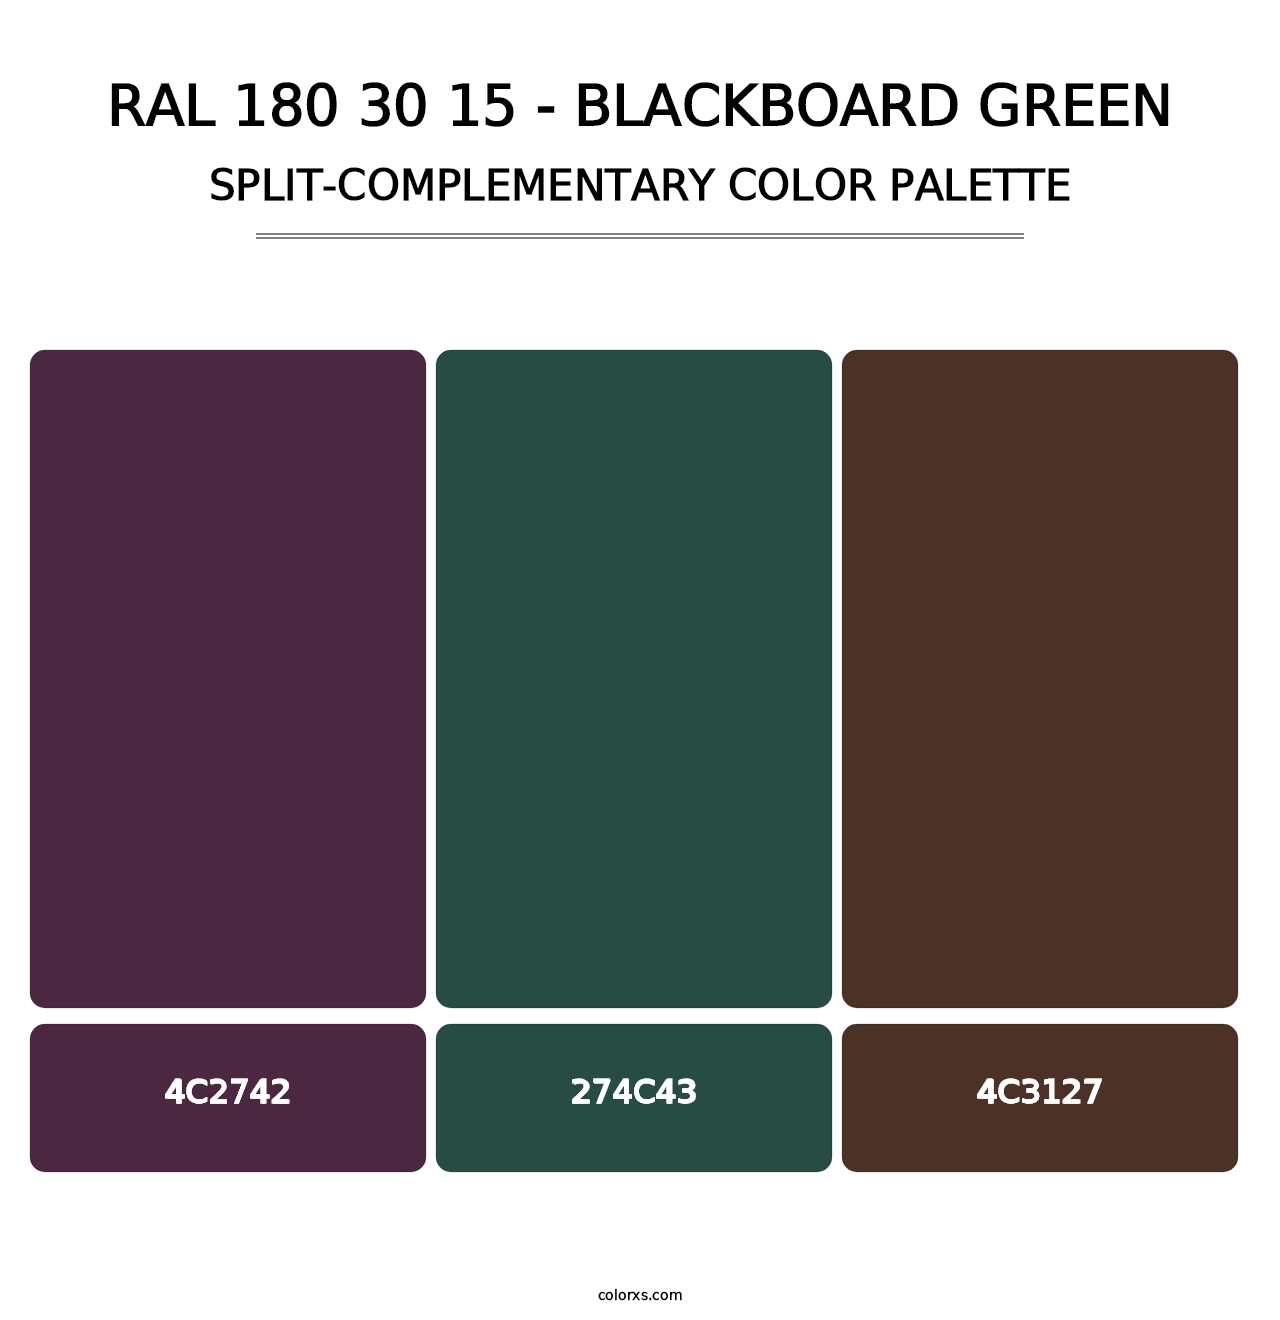 RAL 180 30 15 - Blackboard Green - Split-Complementary Color Palette